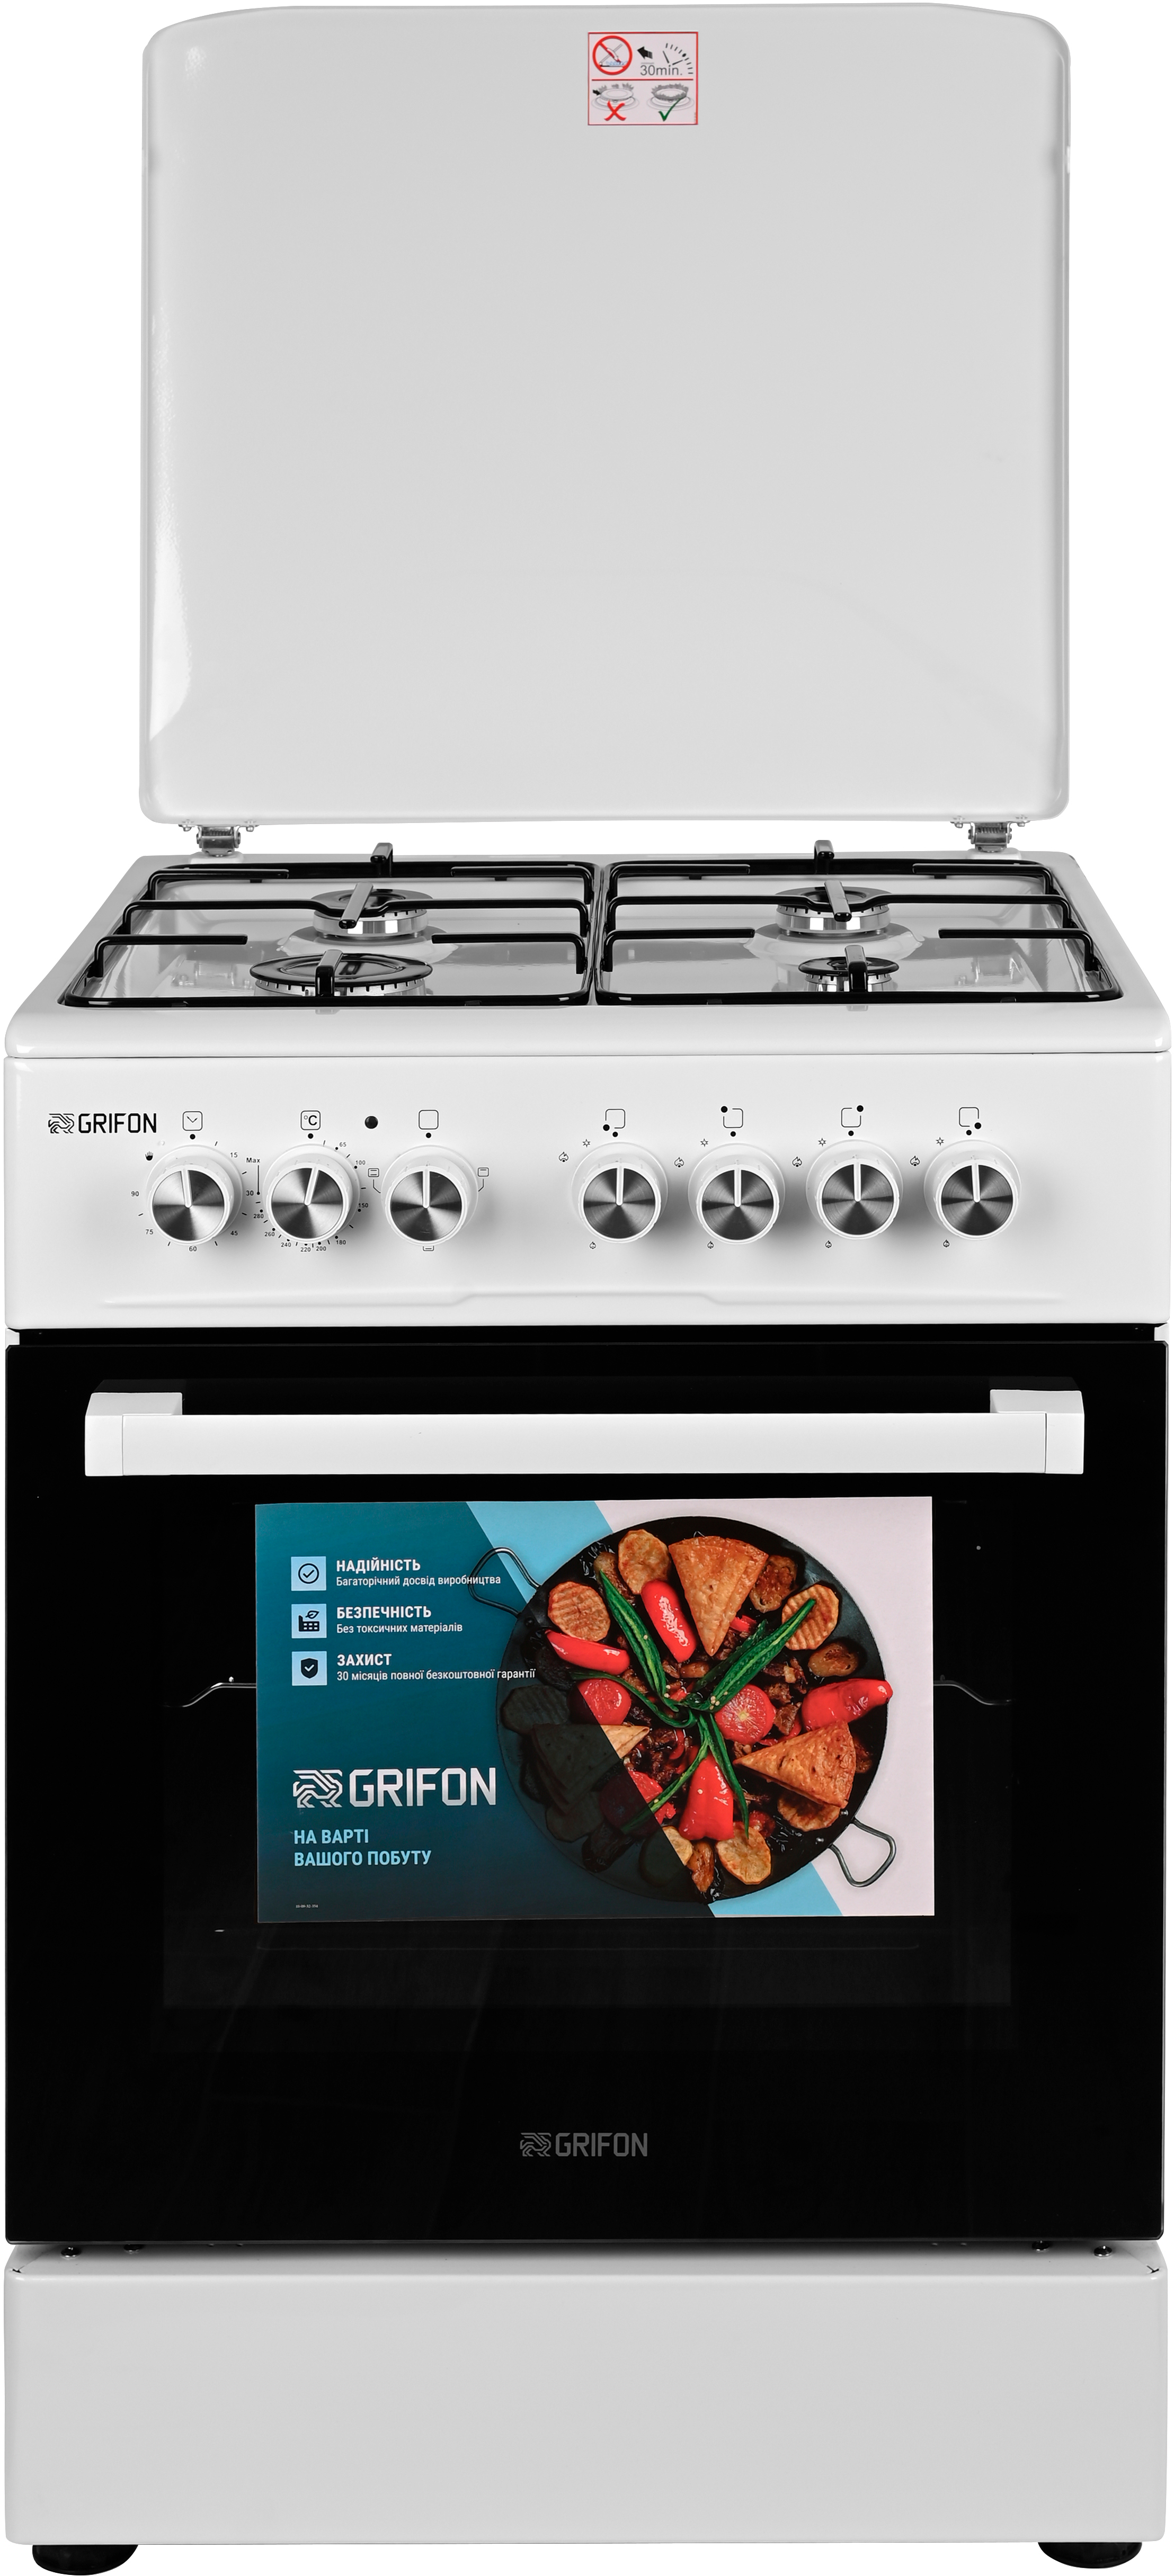 Кухонная плита Grifon C642W-MAB1 в интернет-магазине, главное фото